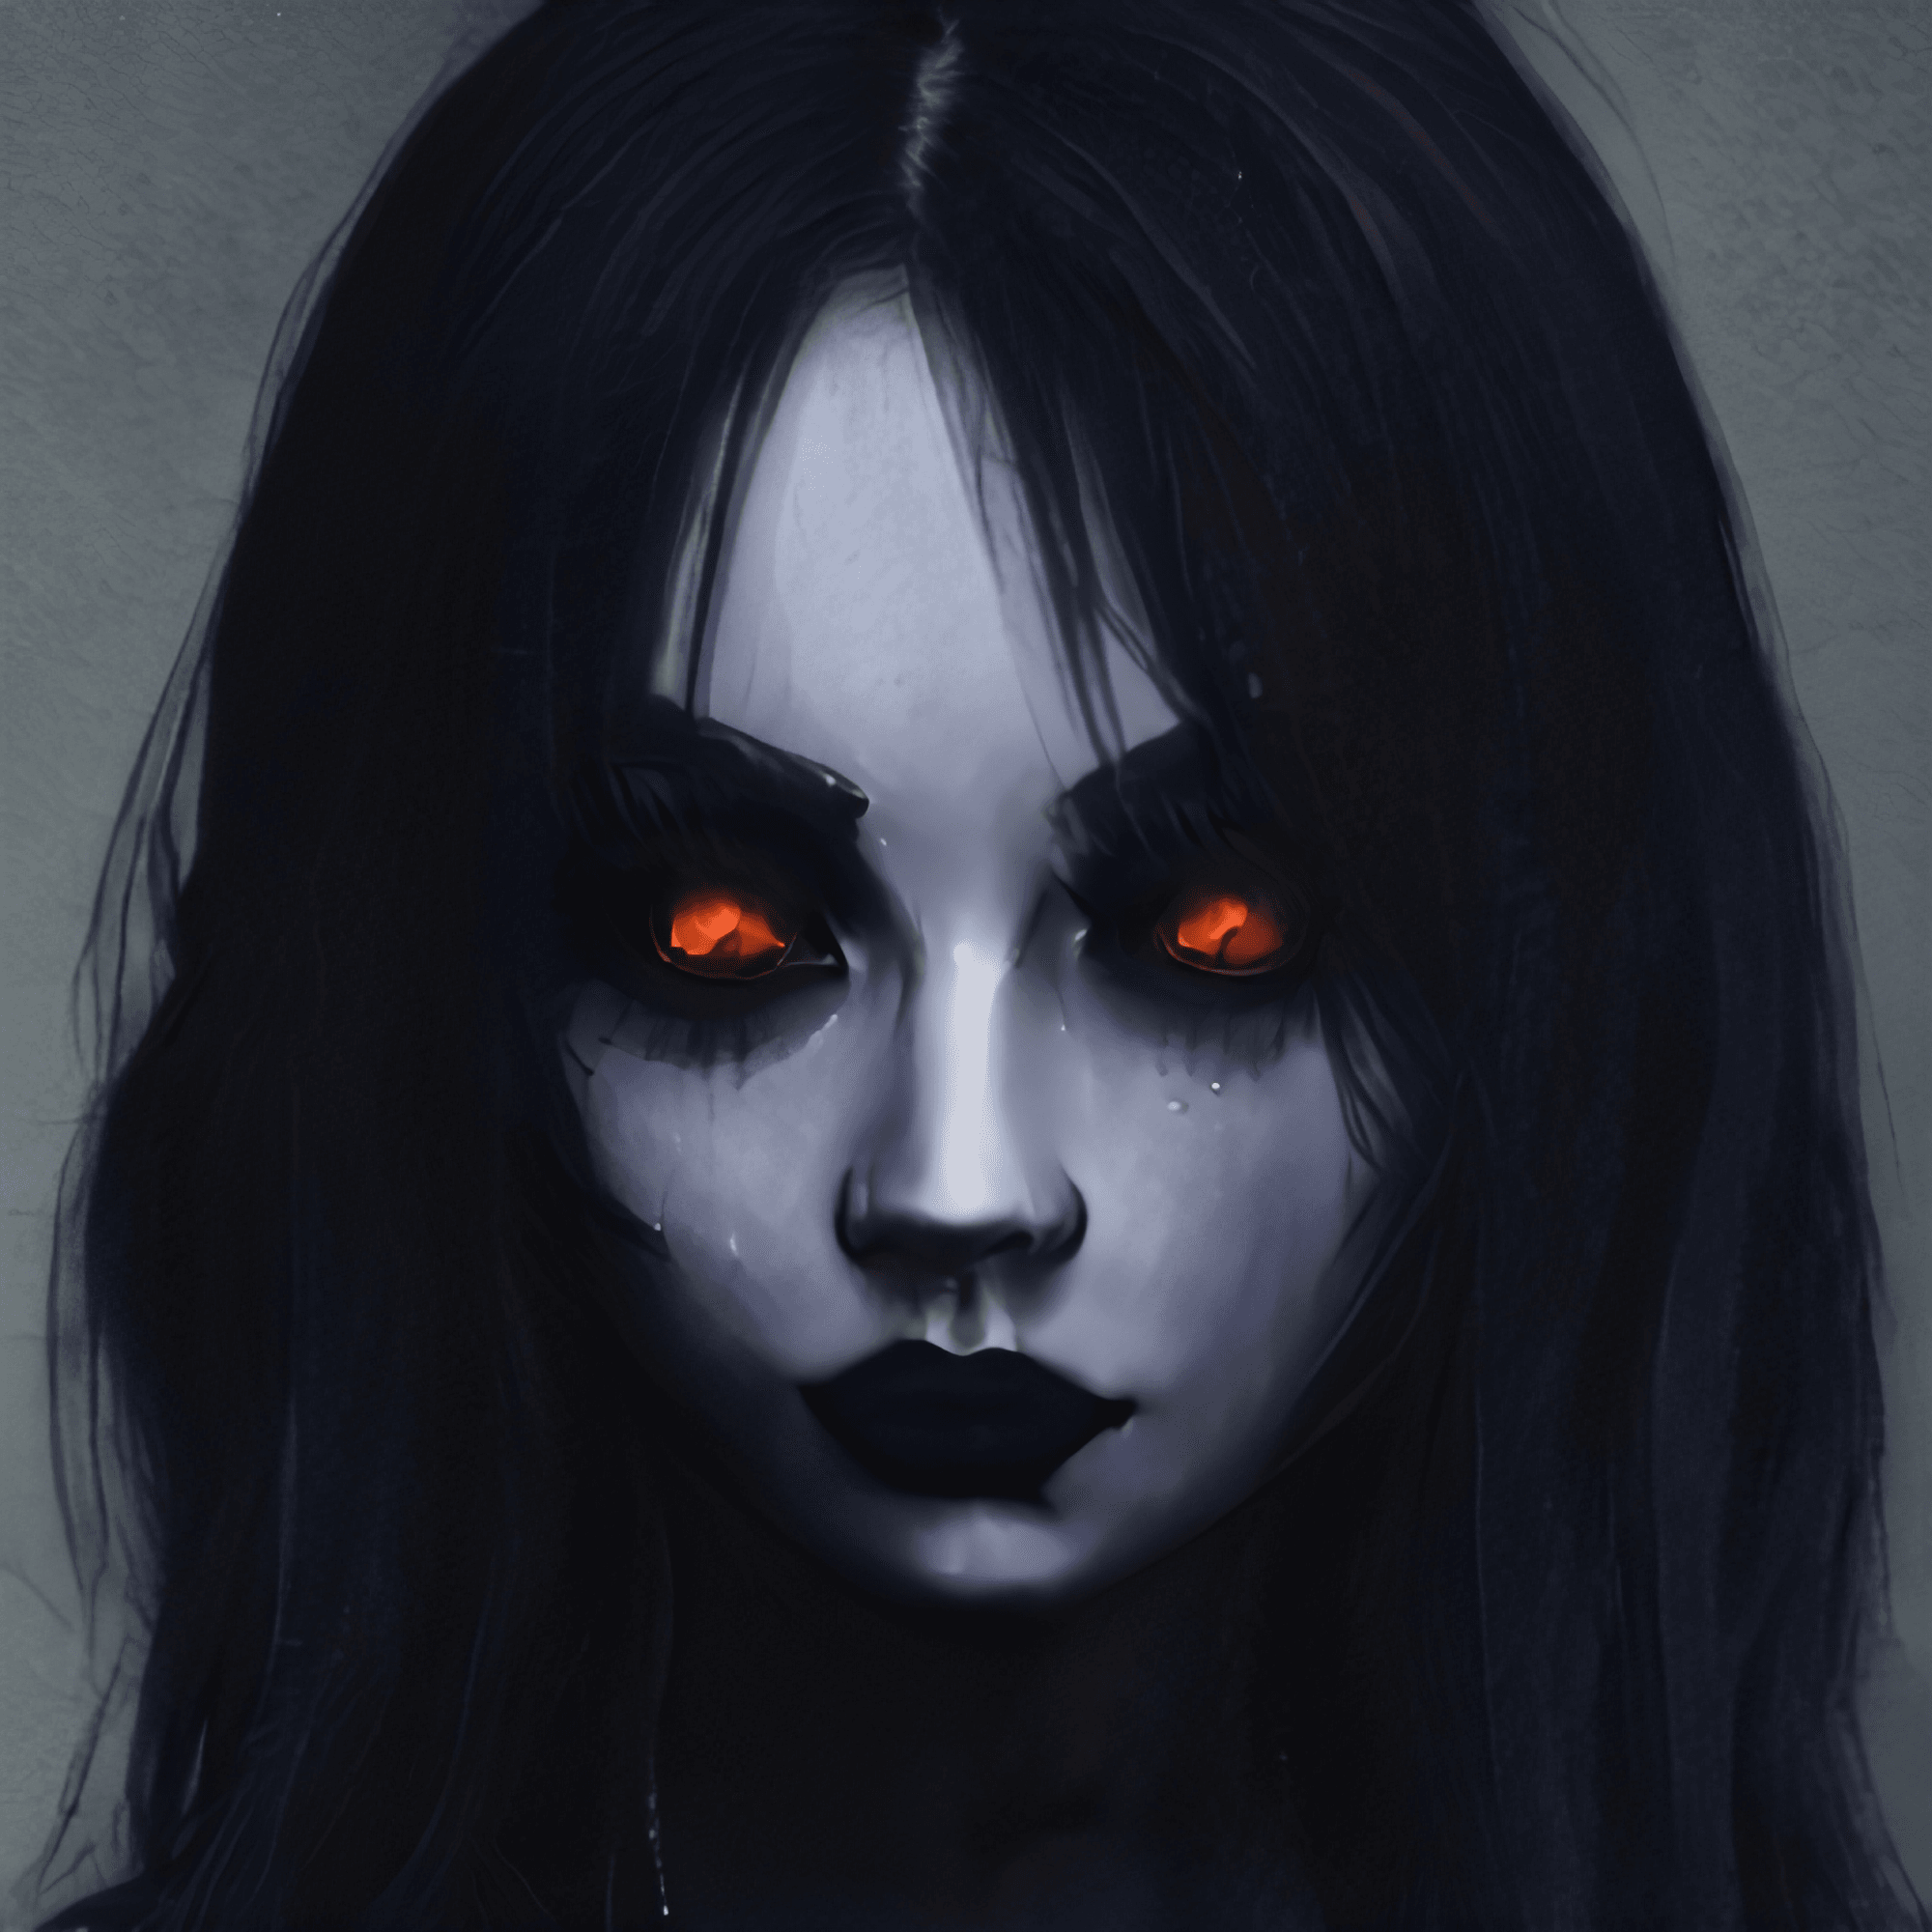 Demon girl - Abstract consistent | OpenSea